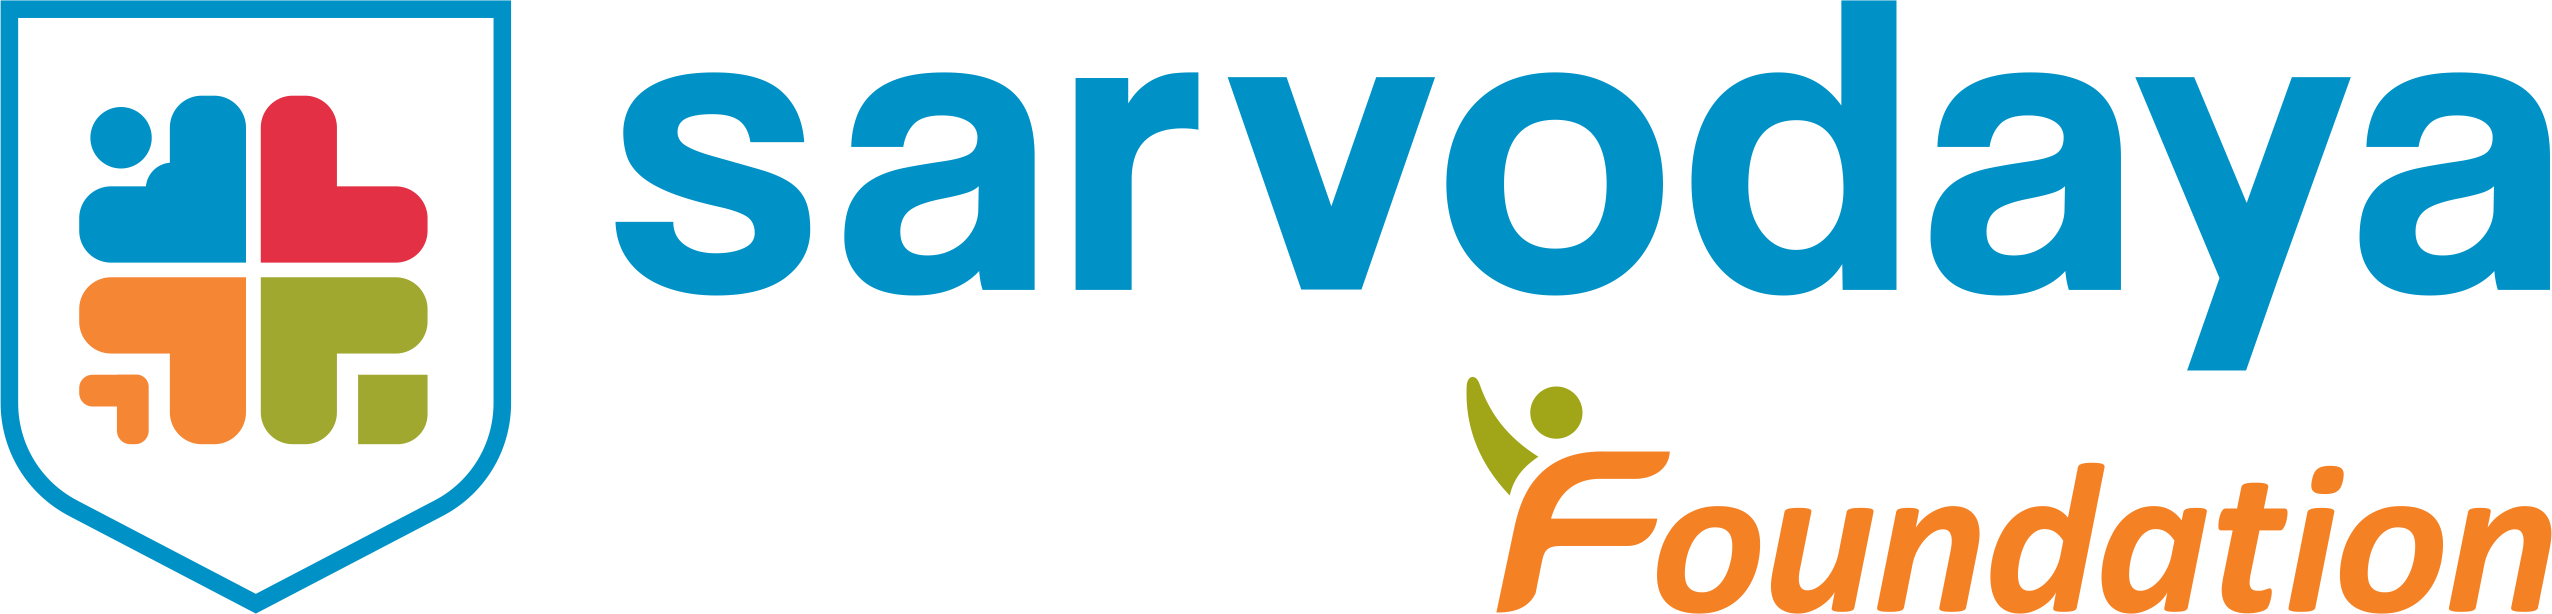 Sarvodaya Foundation logo